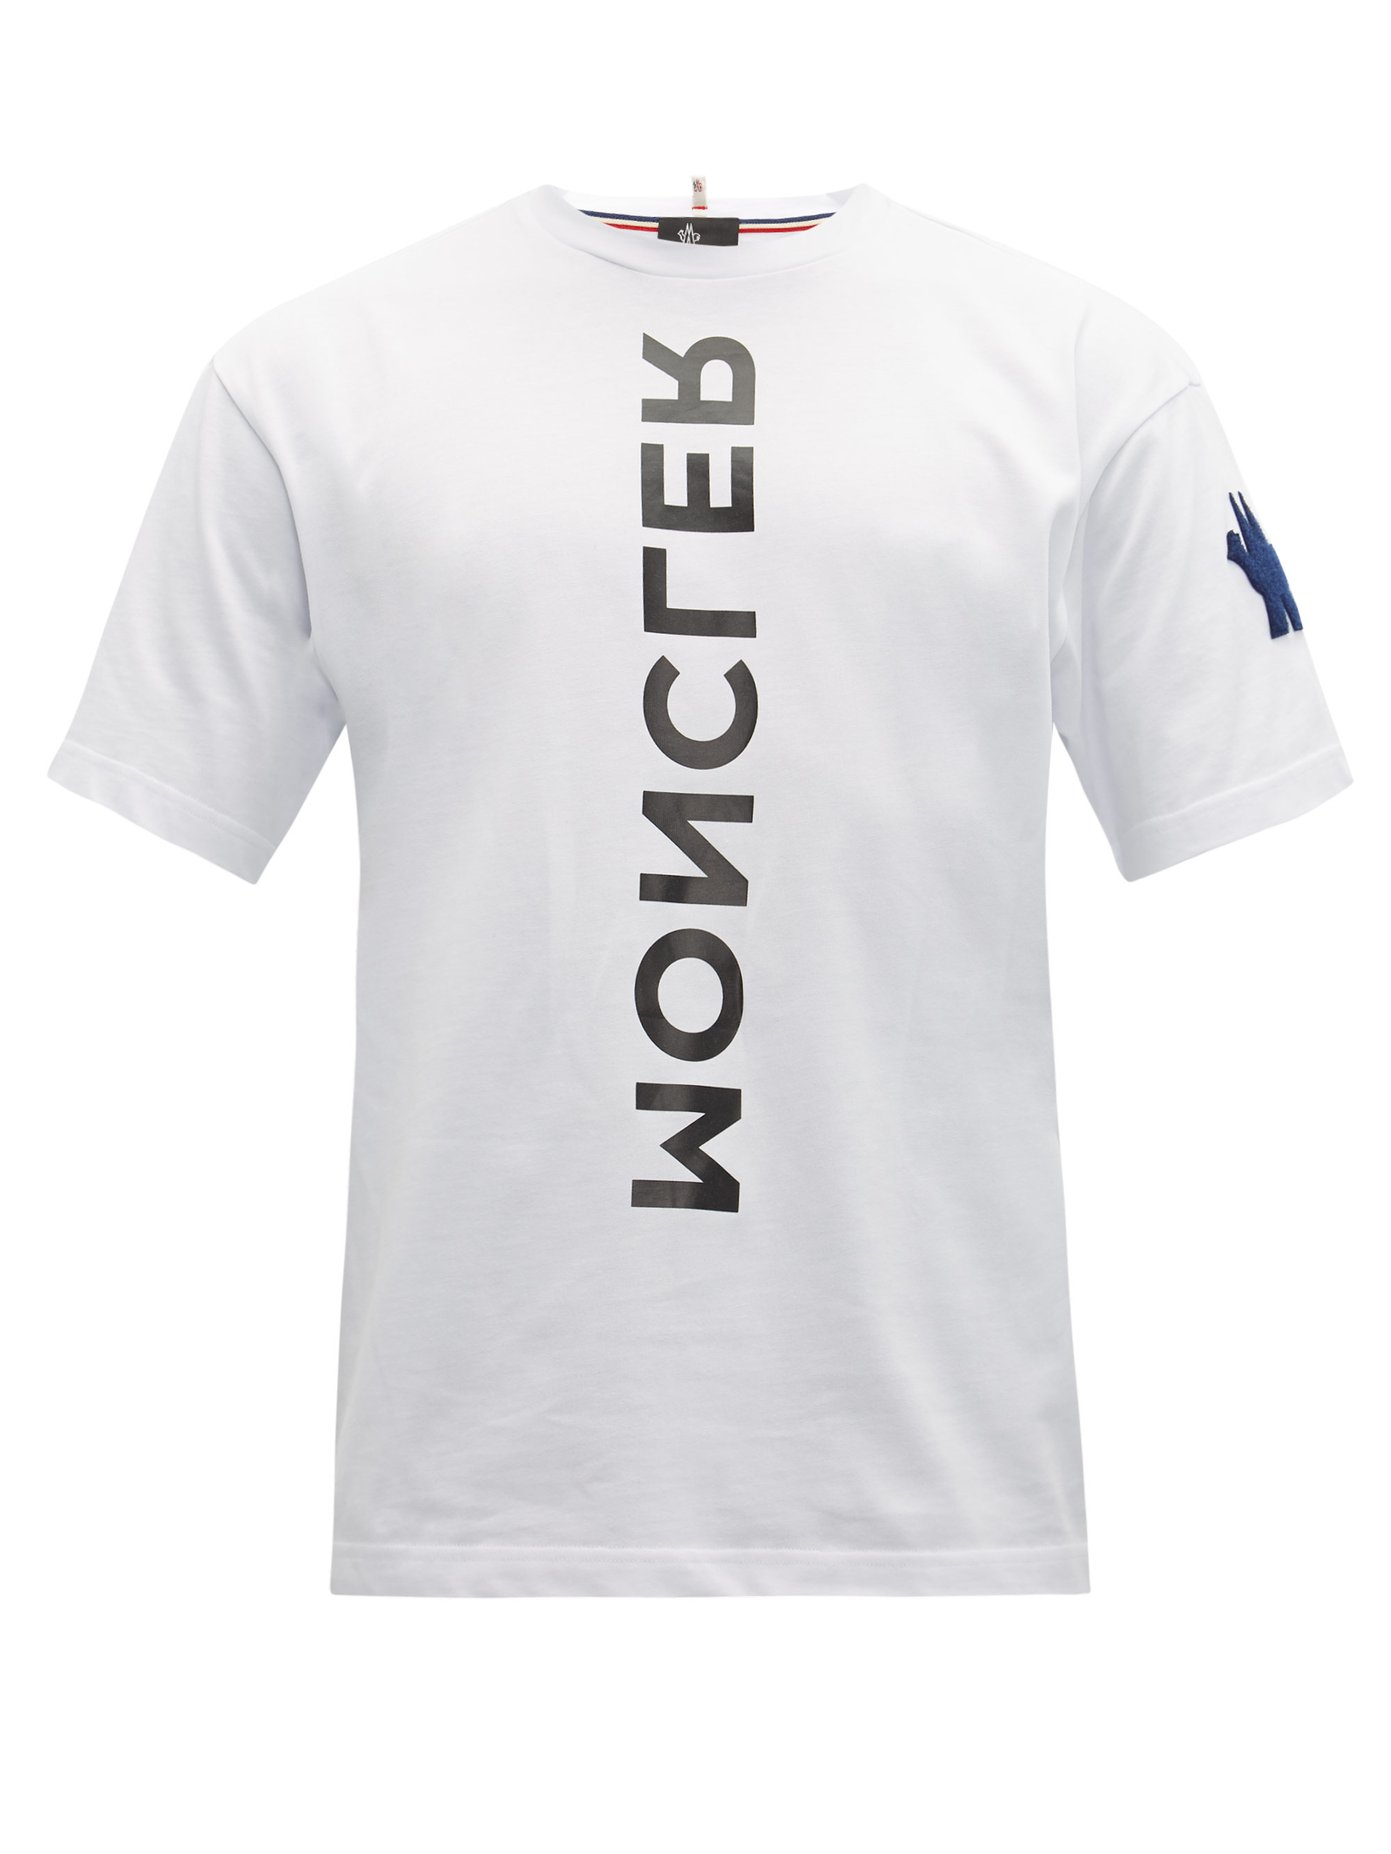 moncler t shirt sale uk